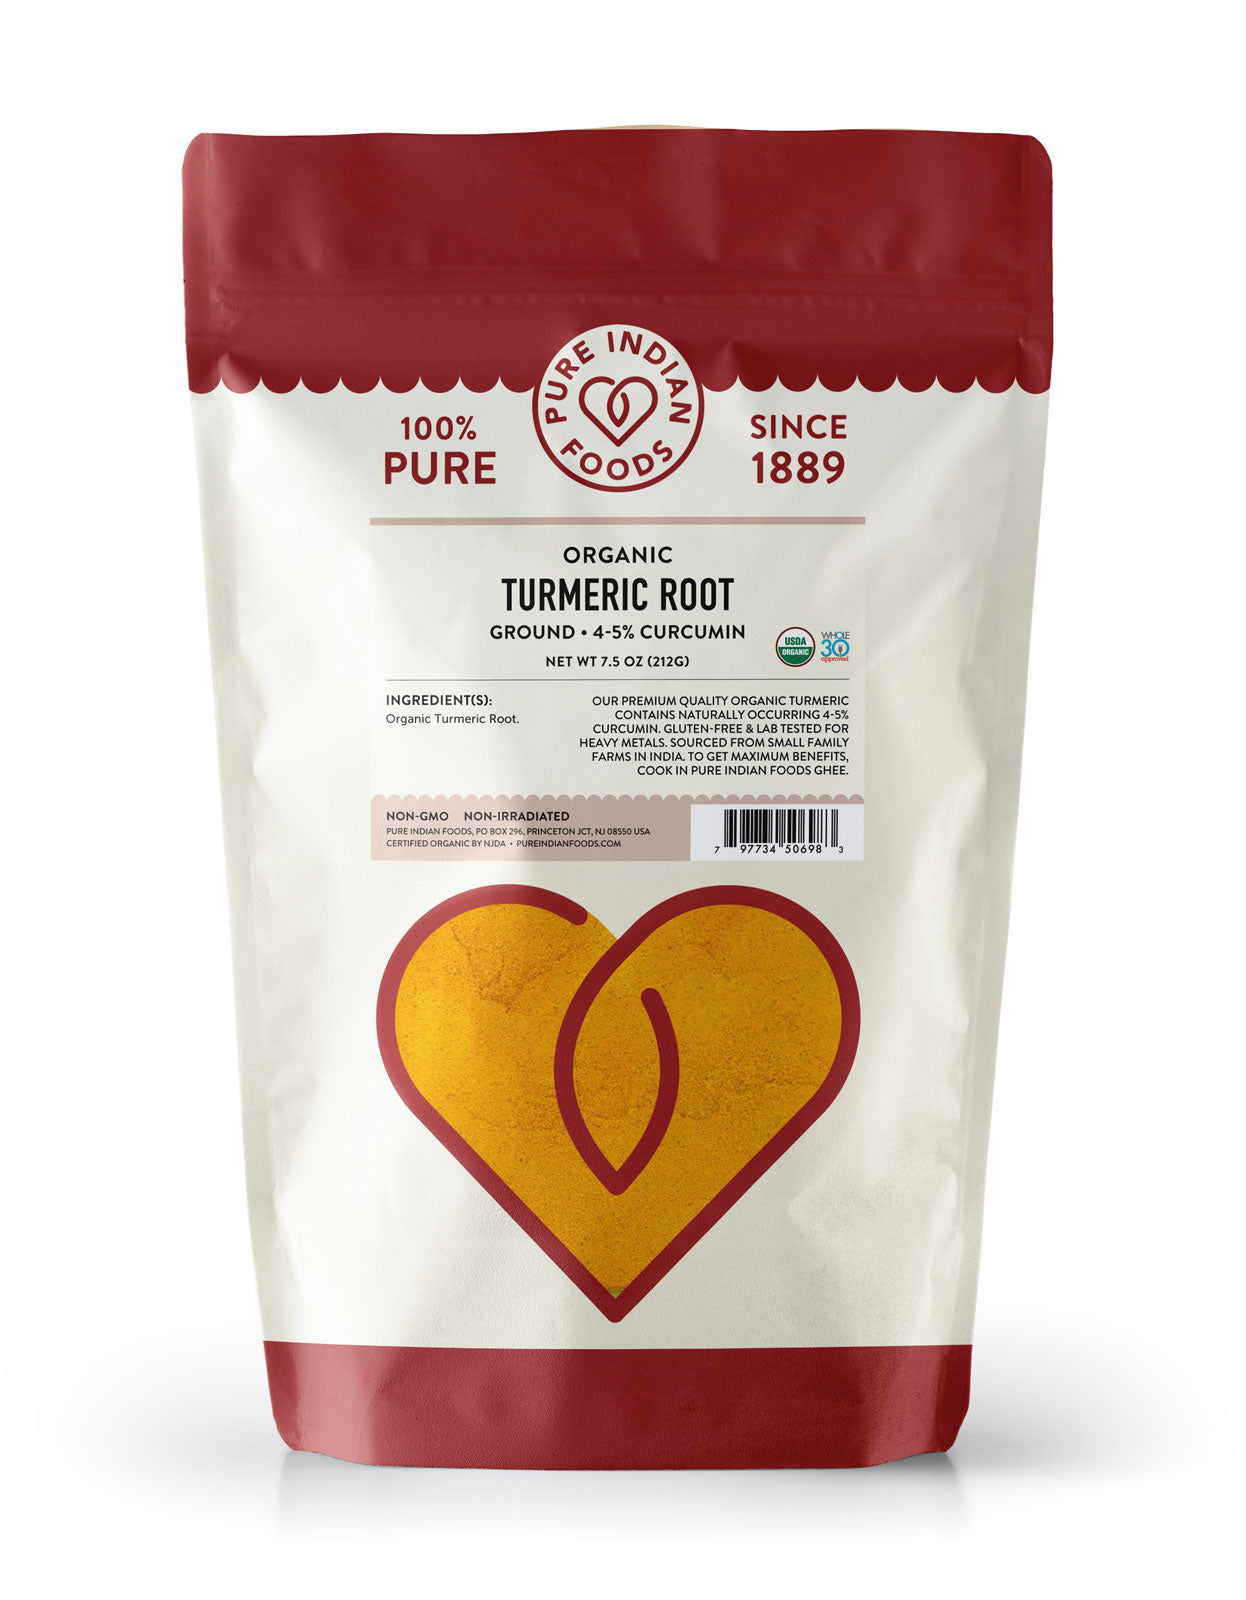 Bag of Pure Indian Foods Organic Turmeric Powder.